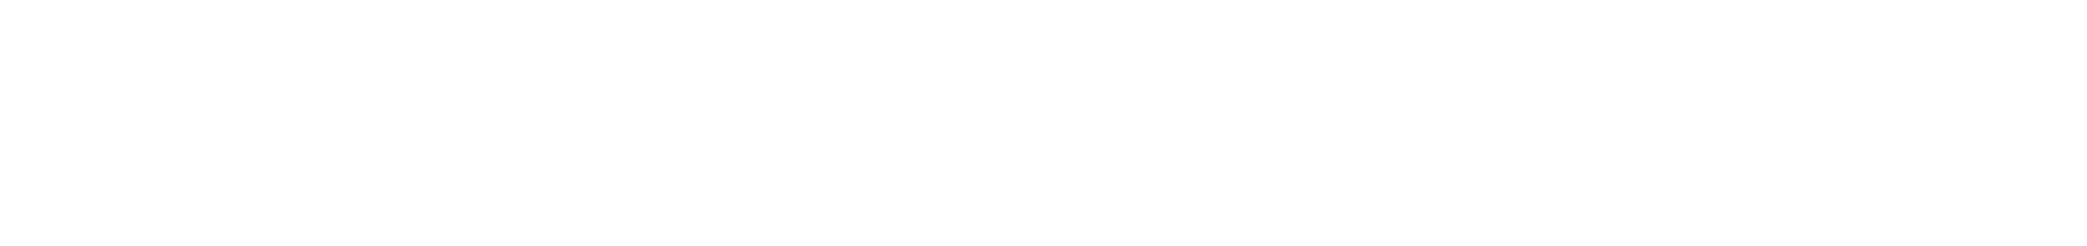 EVOLVE THE EXPERIENCE OF ENJOYING WINE